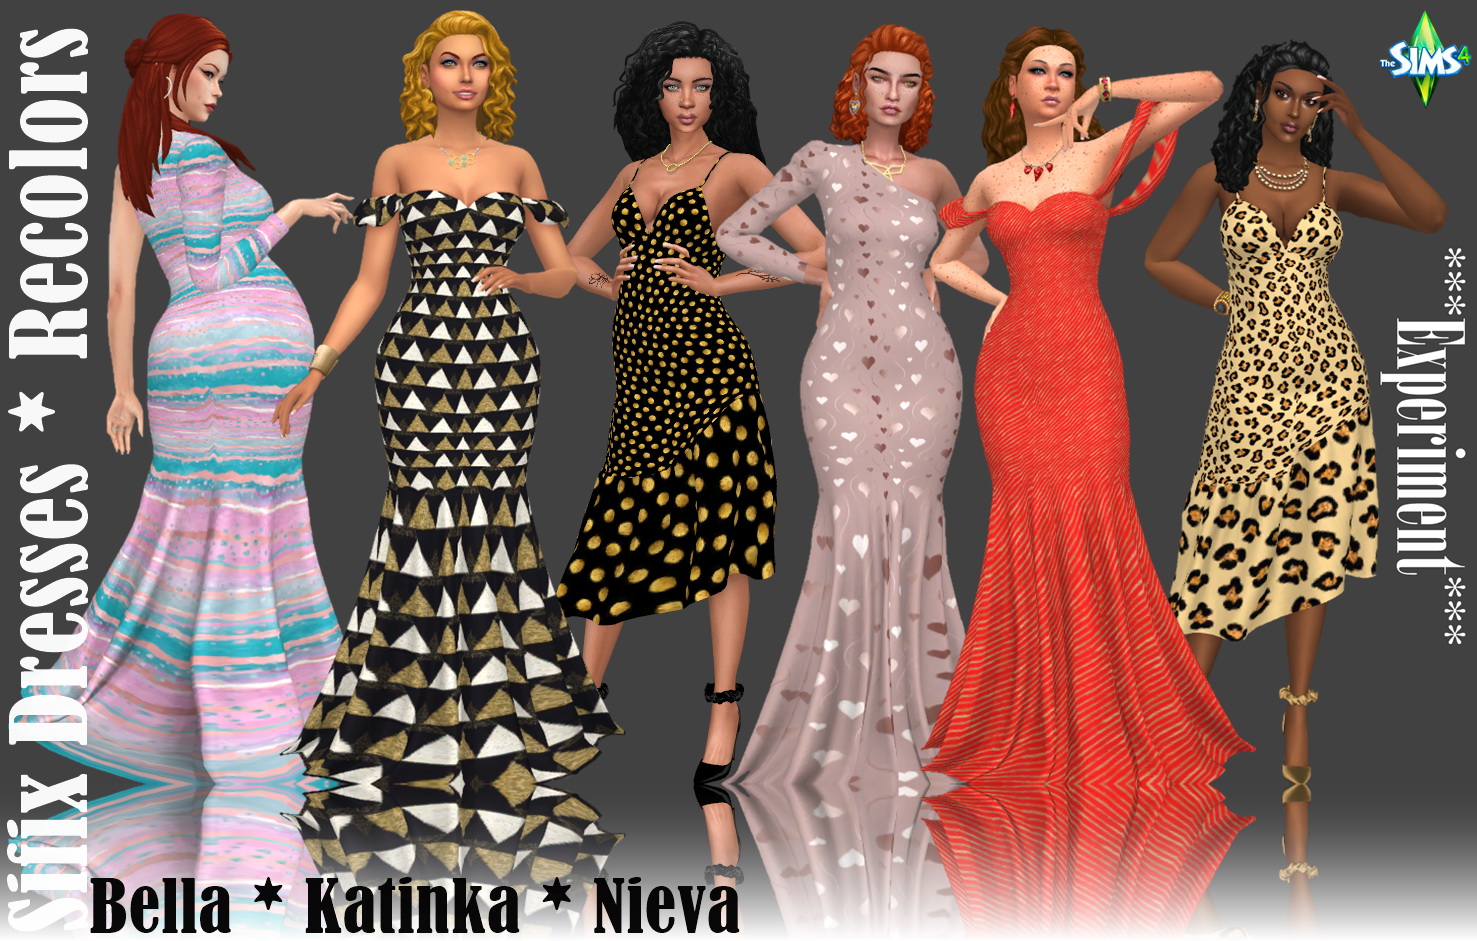 Sifix S Feronia Dress Sims 4 Dresses Sims 4 Clothing